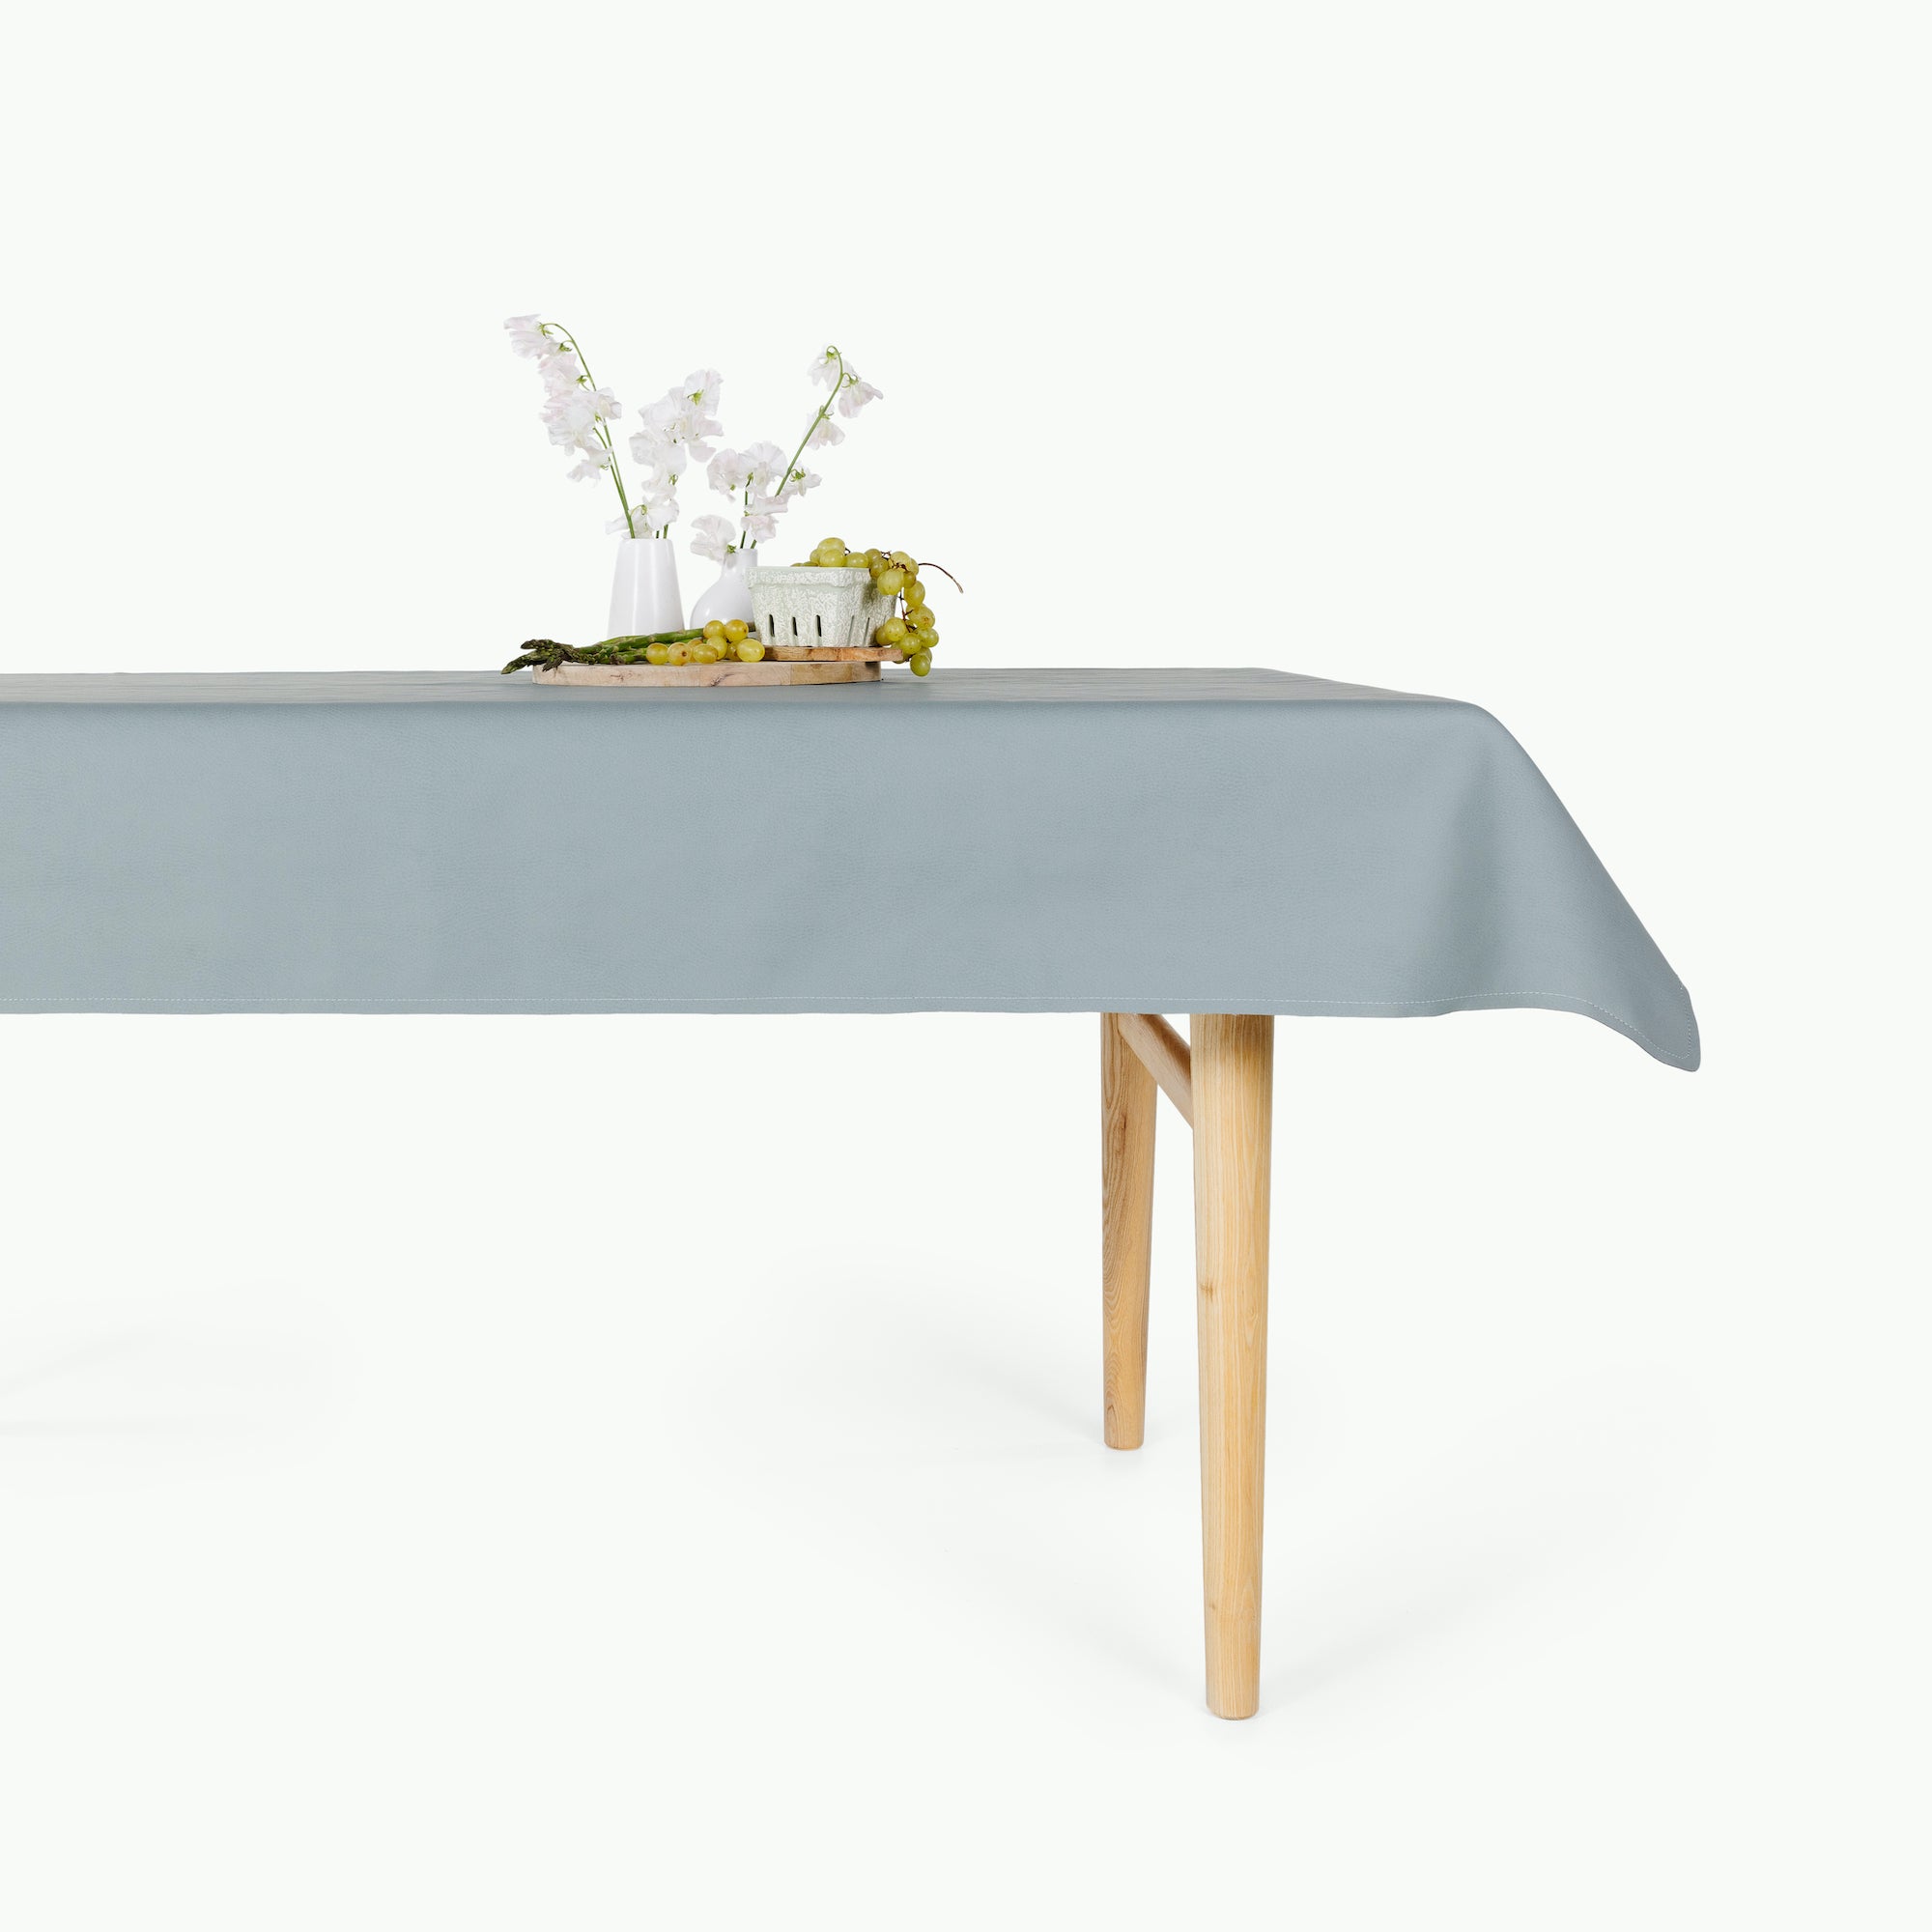 Amalfi / 10 Foot@amalfi tablecloth on table